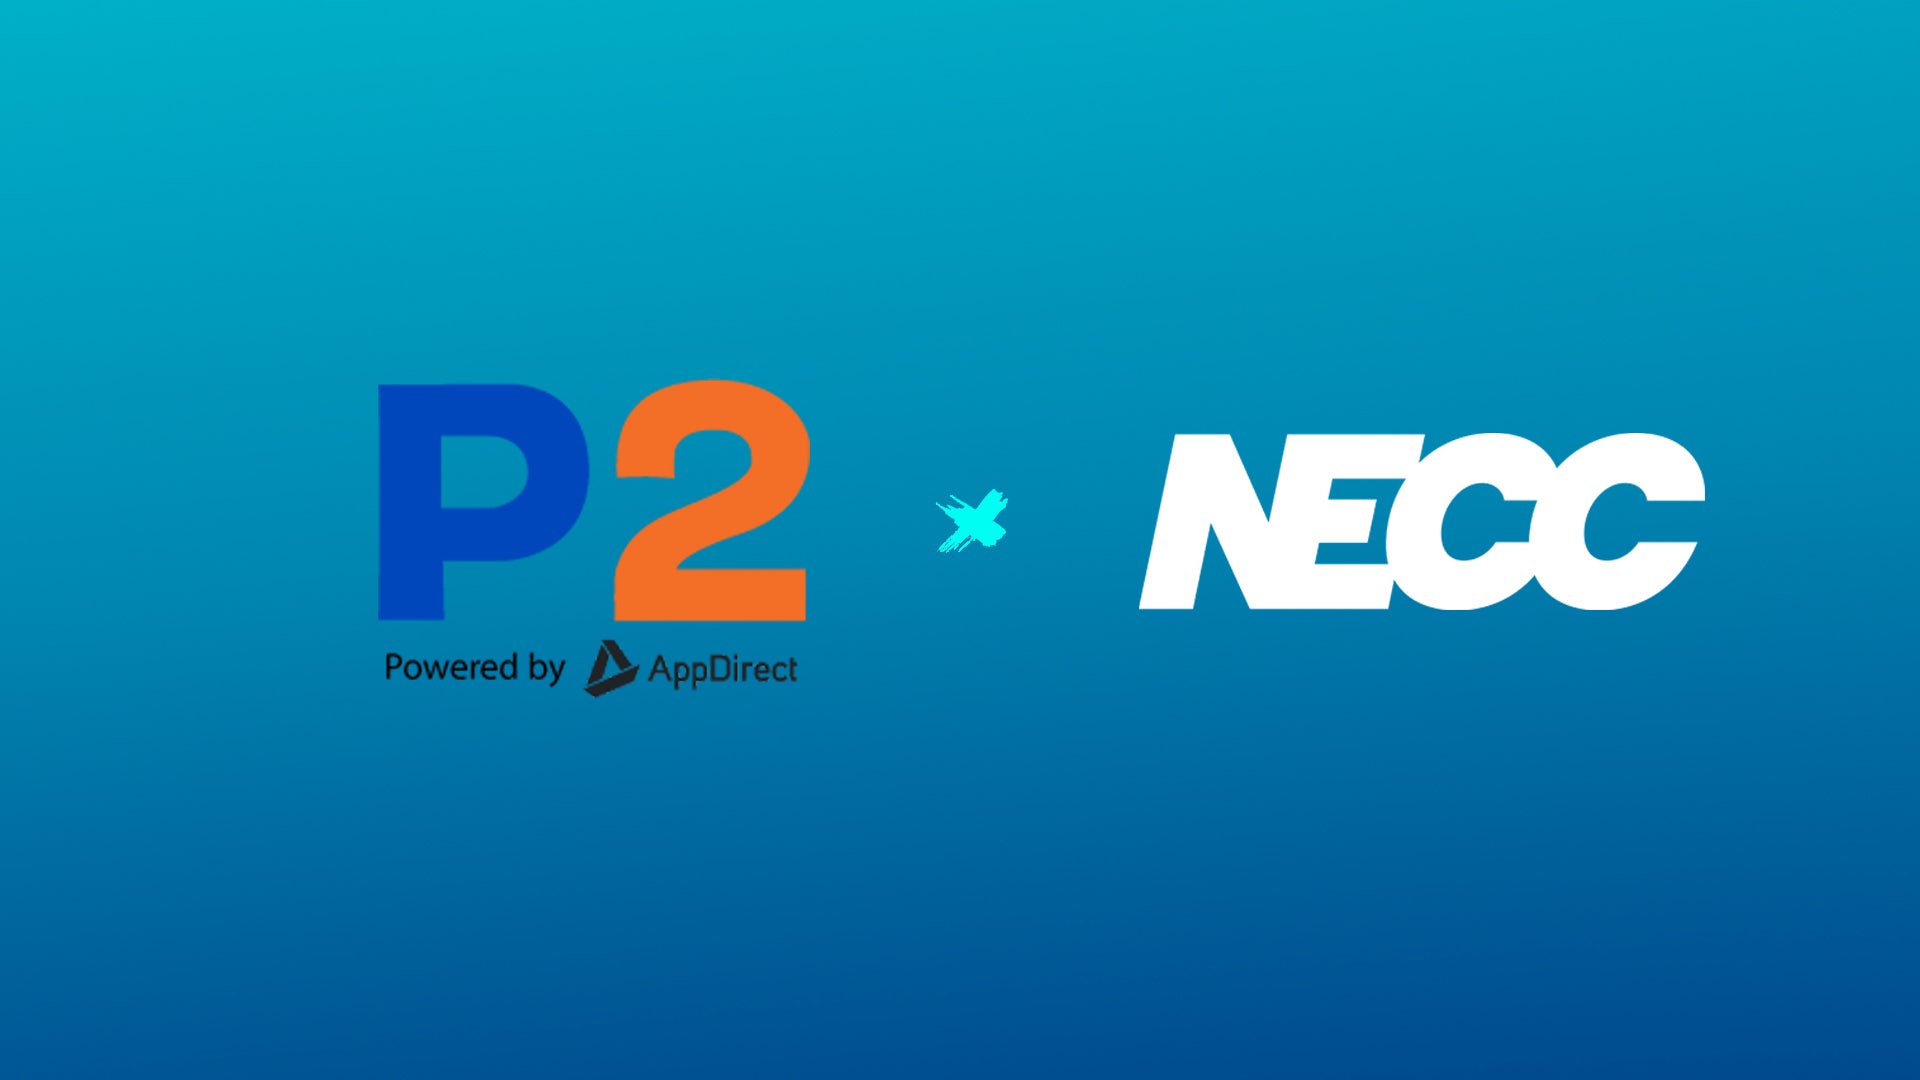 NECC Announces Strategic Partnership with P2 Telecom